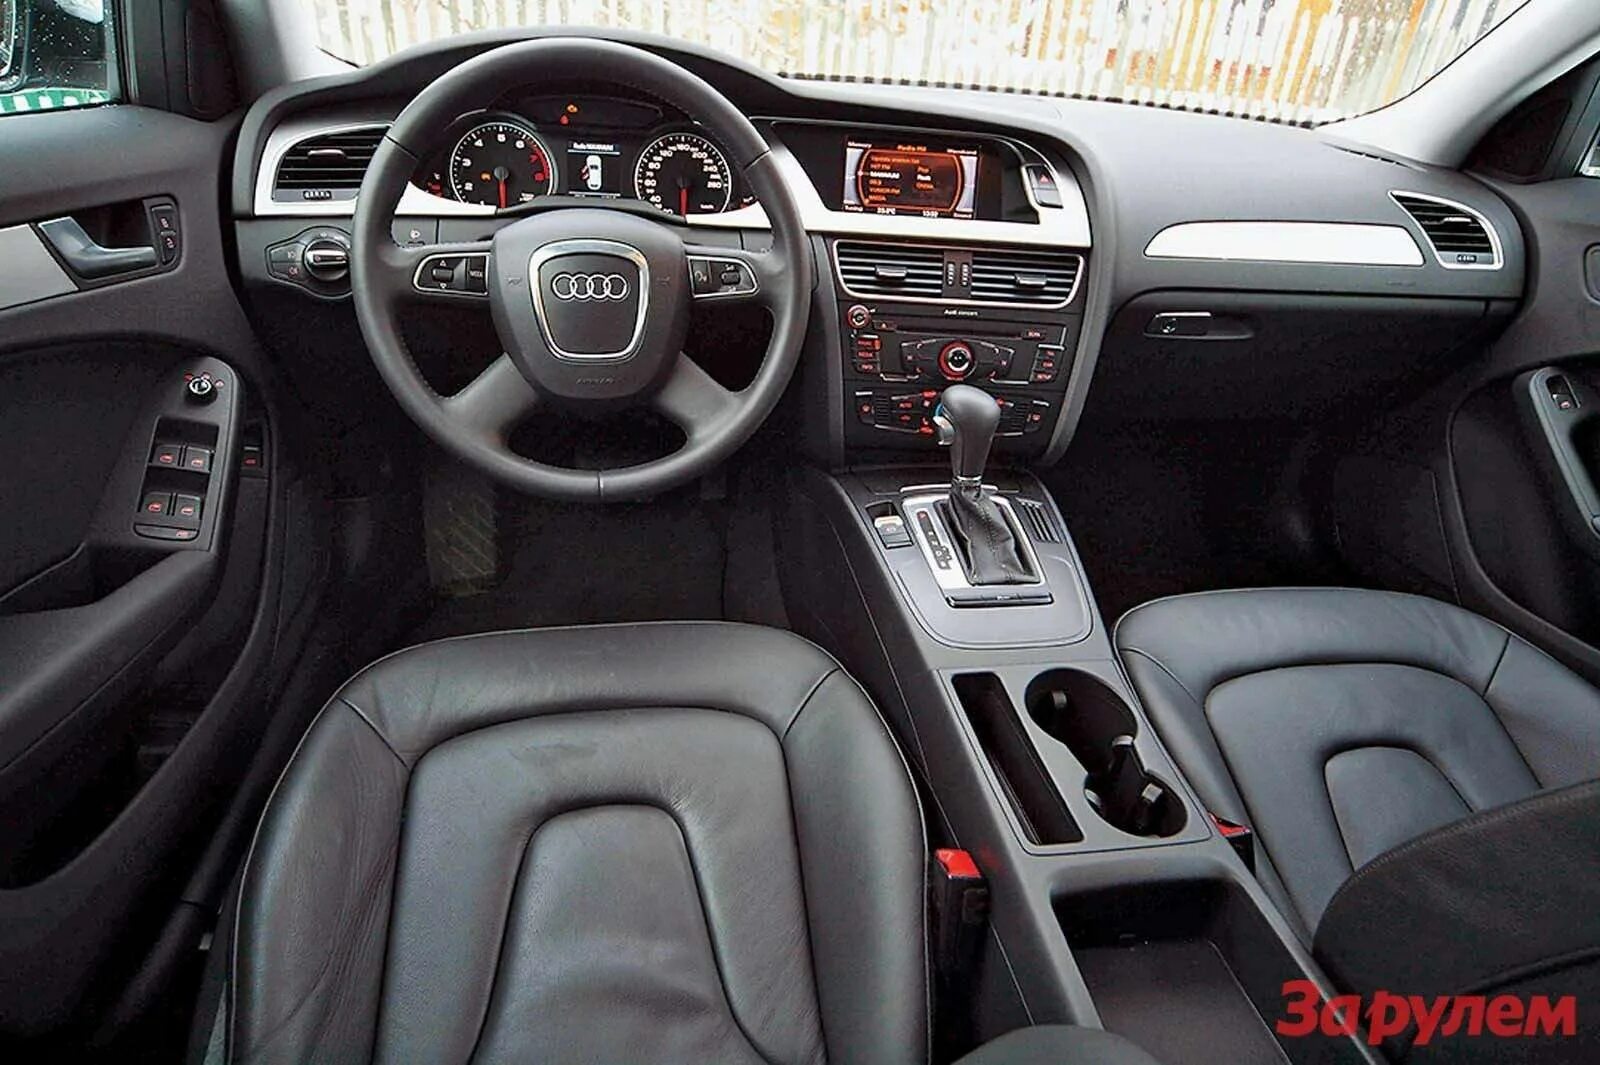 Купить ауди механика. Audi a4 2012 салон. Ауди а4 универсал салон. Audi a4 Allroad салон. Audi a4 Allroad b8 салон.